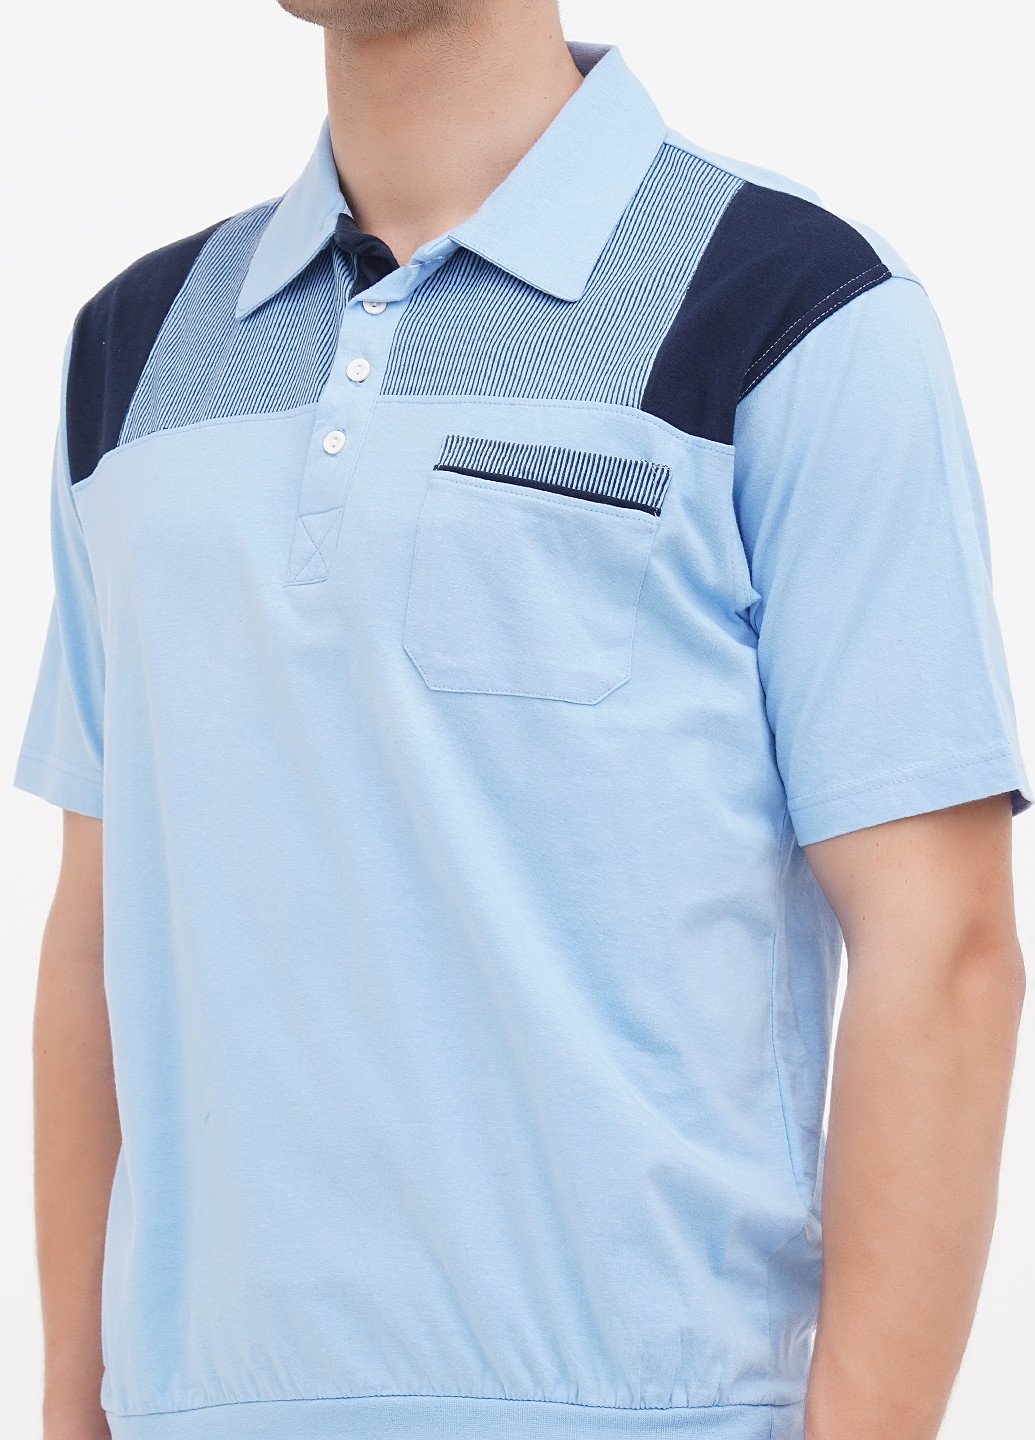 Голубой футболка-поло для мужчин Minimum в полоску